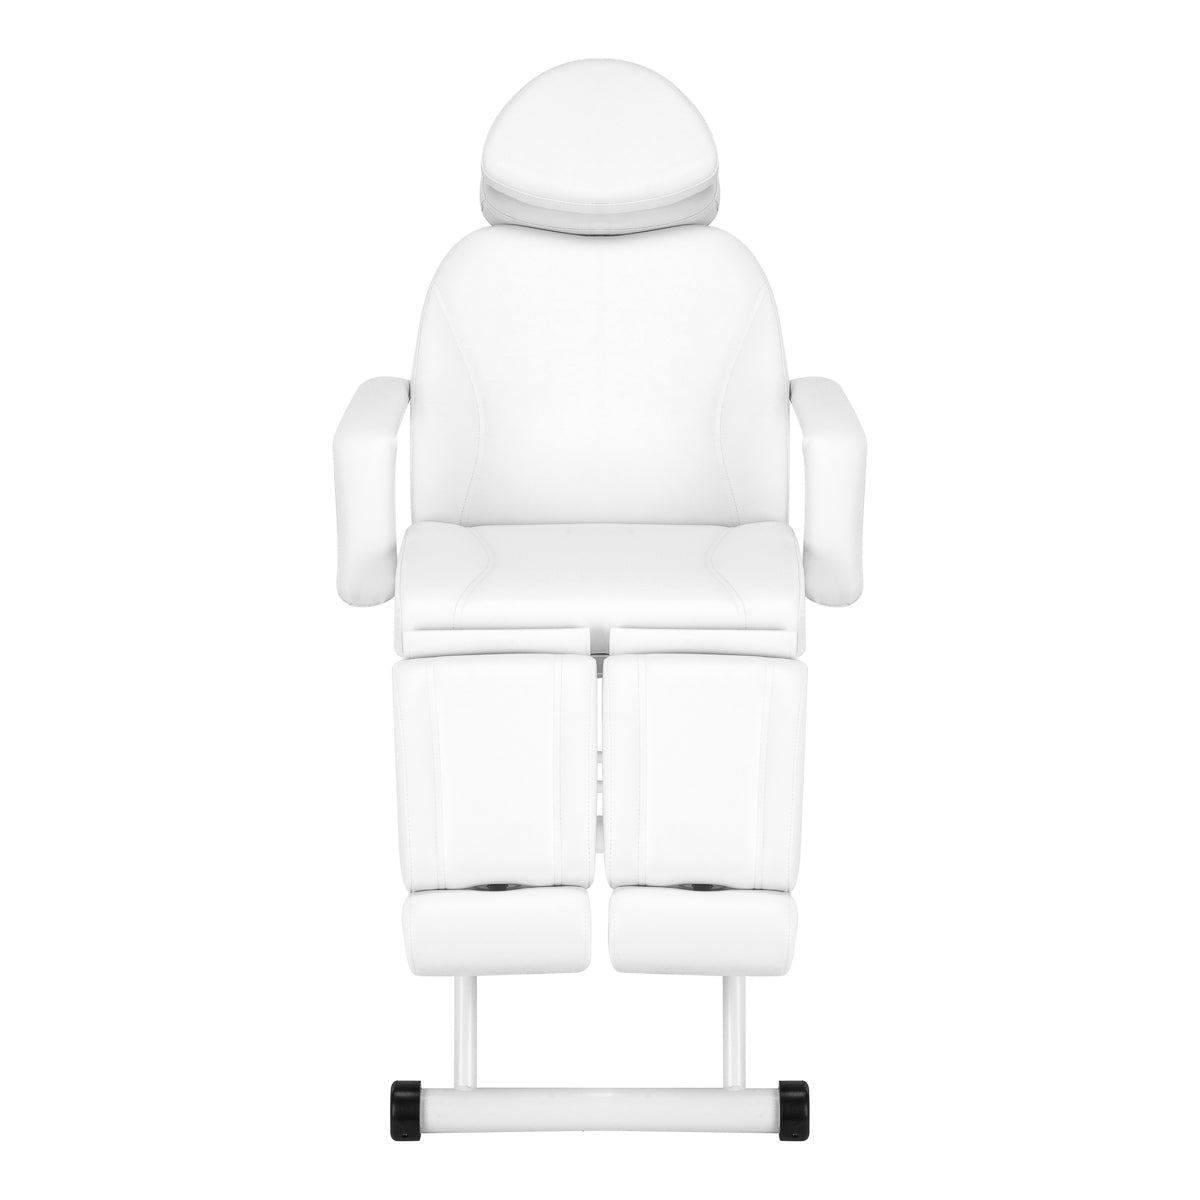 Azzurro Beauty Salon Chair 563S White